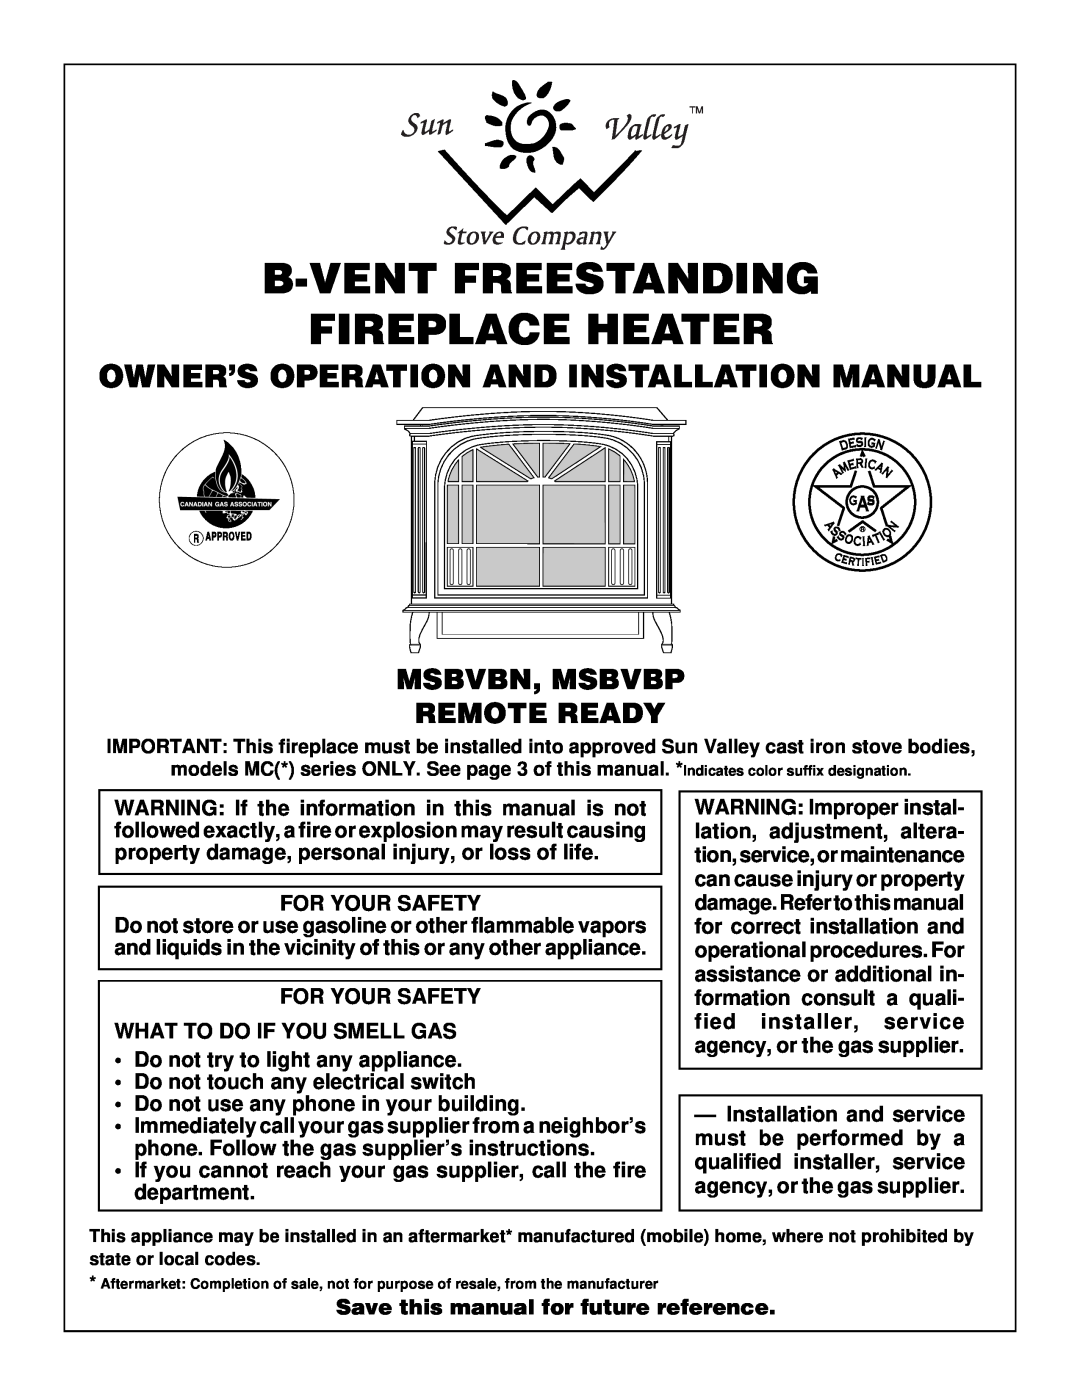 Desa MSBVBN, MSBVBP installation manual B-Ventfreestanding Fireplace Heater, Owner’S Operation And Installation Manual 